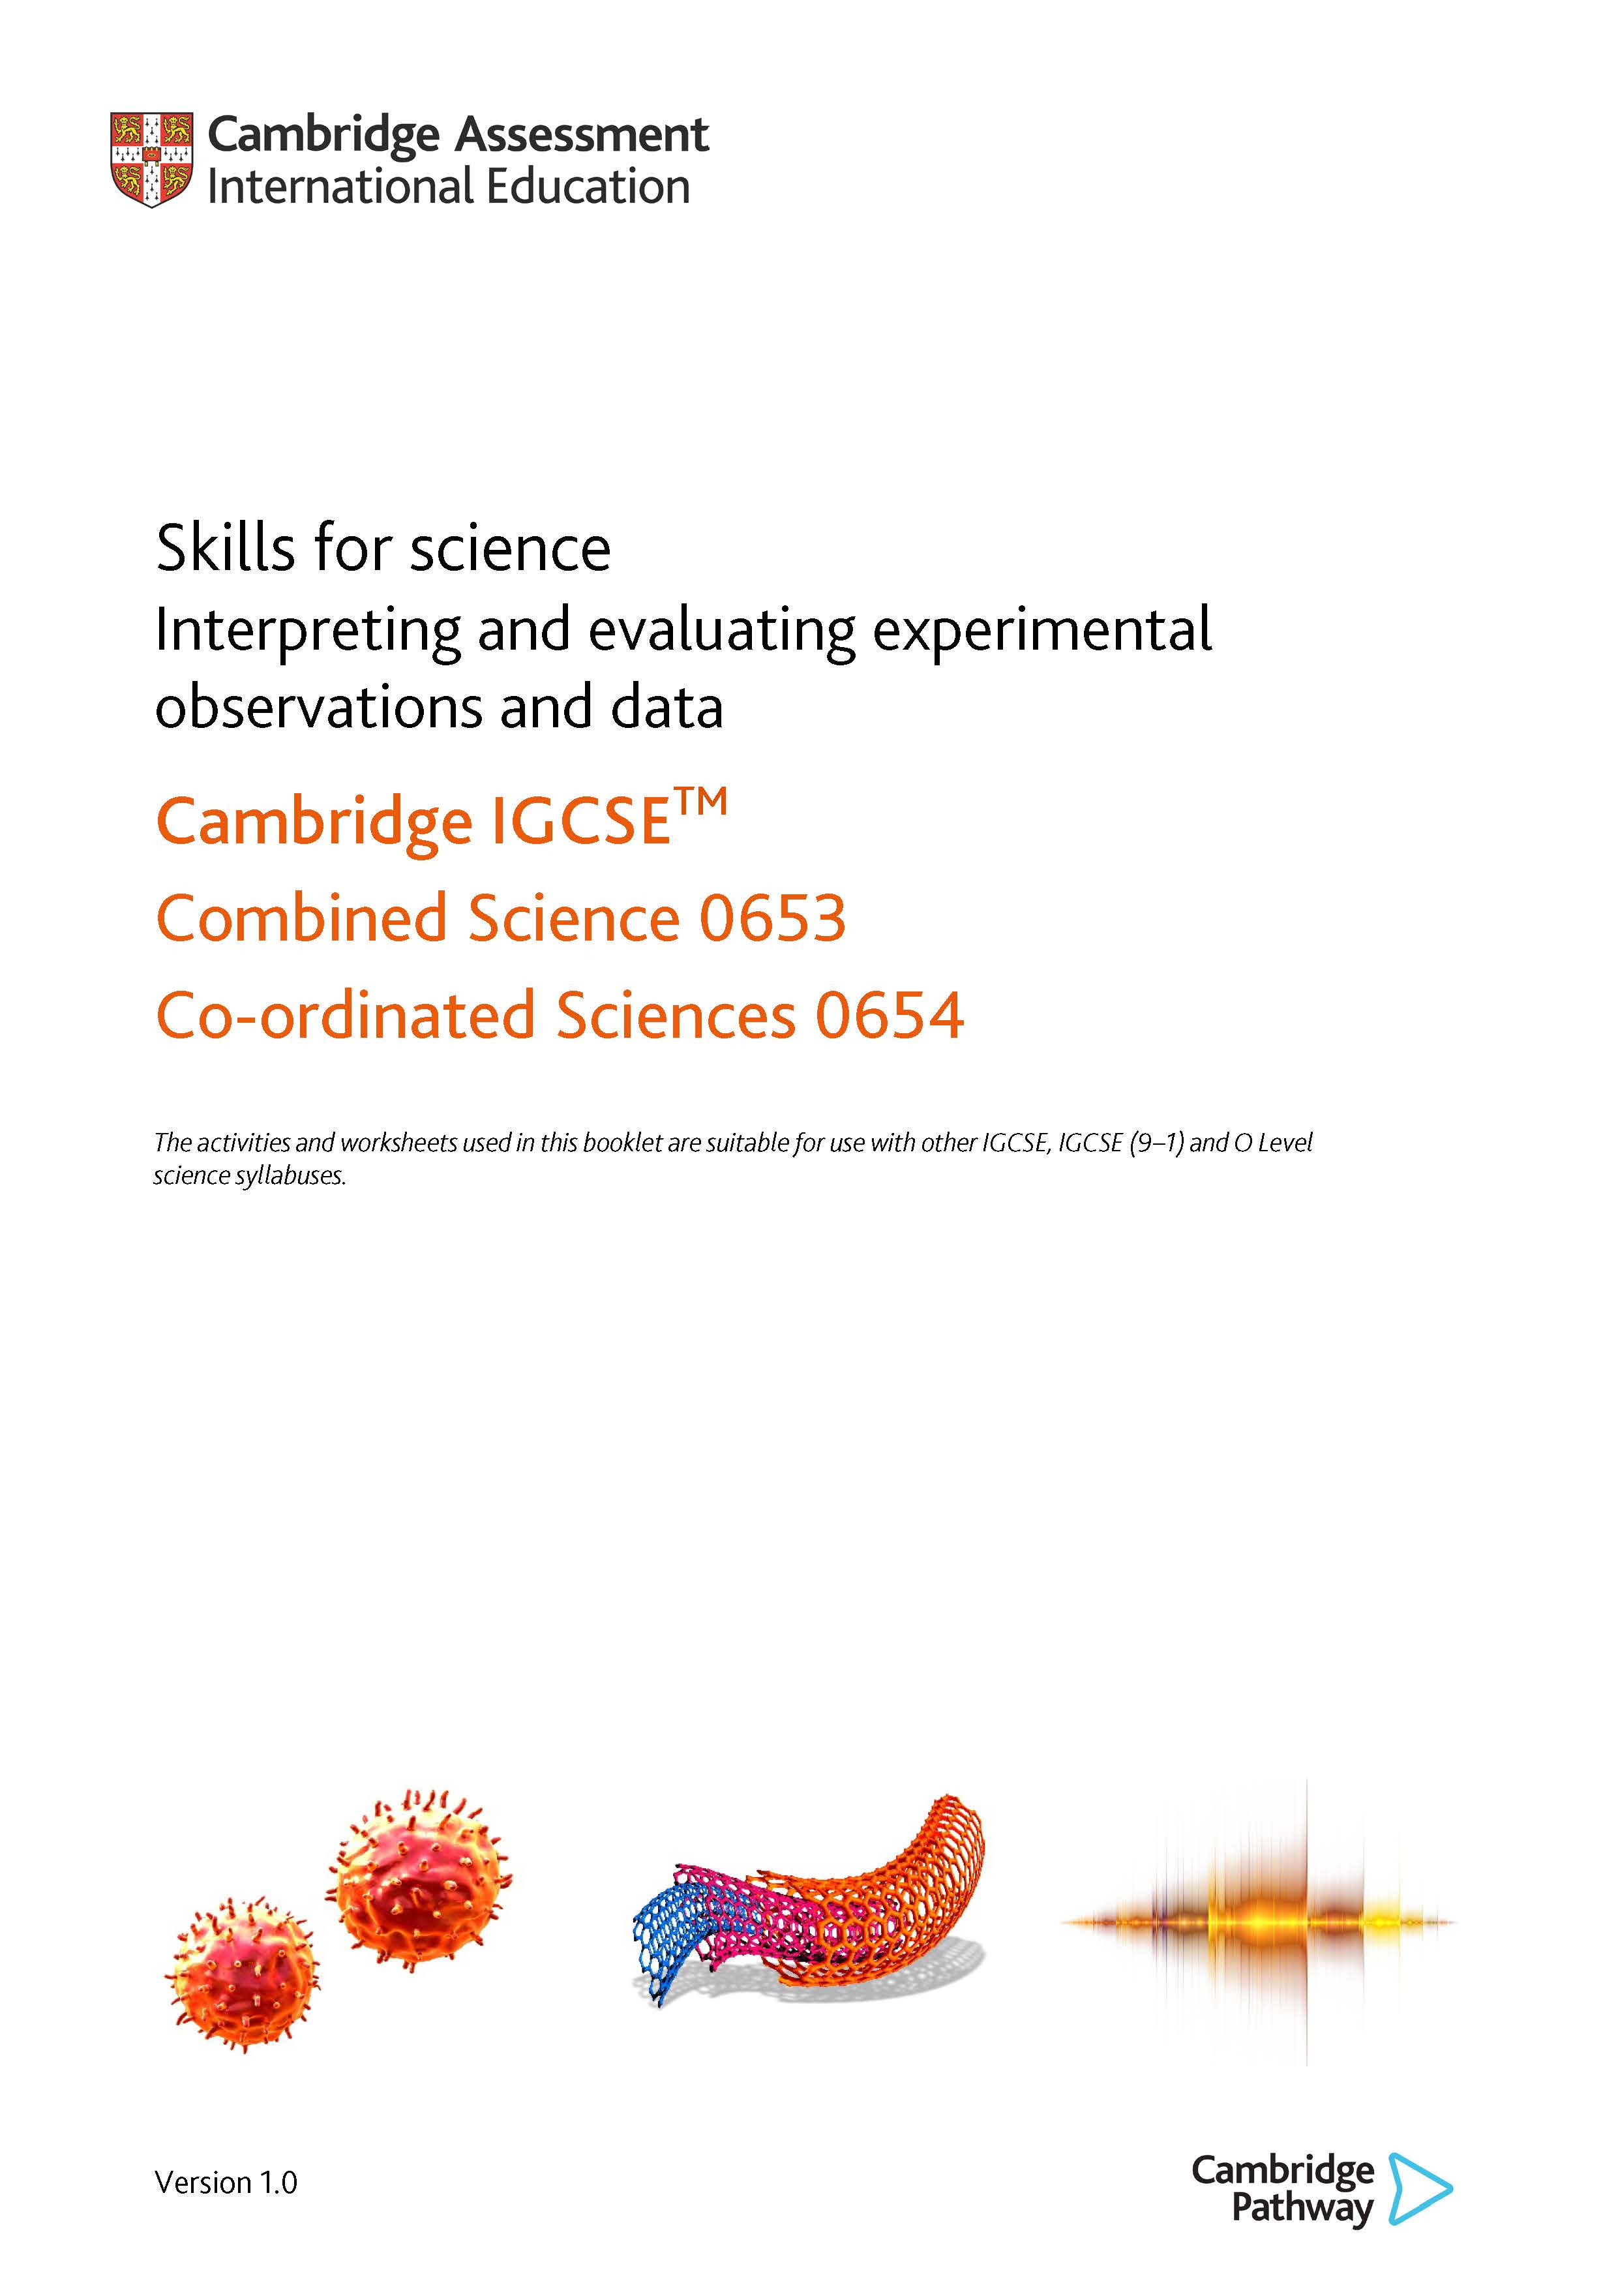 Skills for science - Interpreting